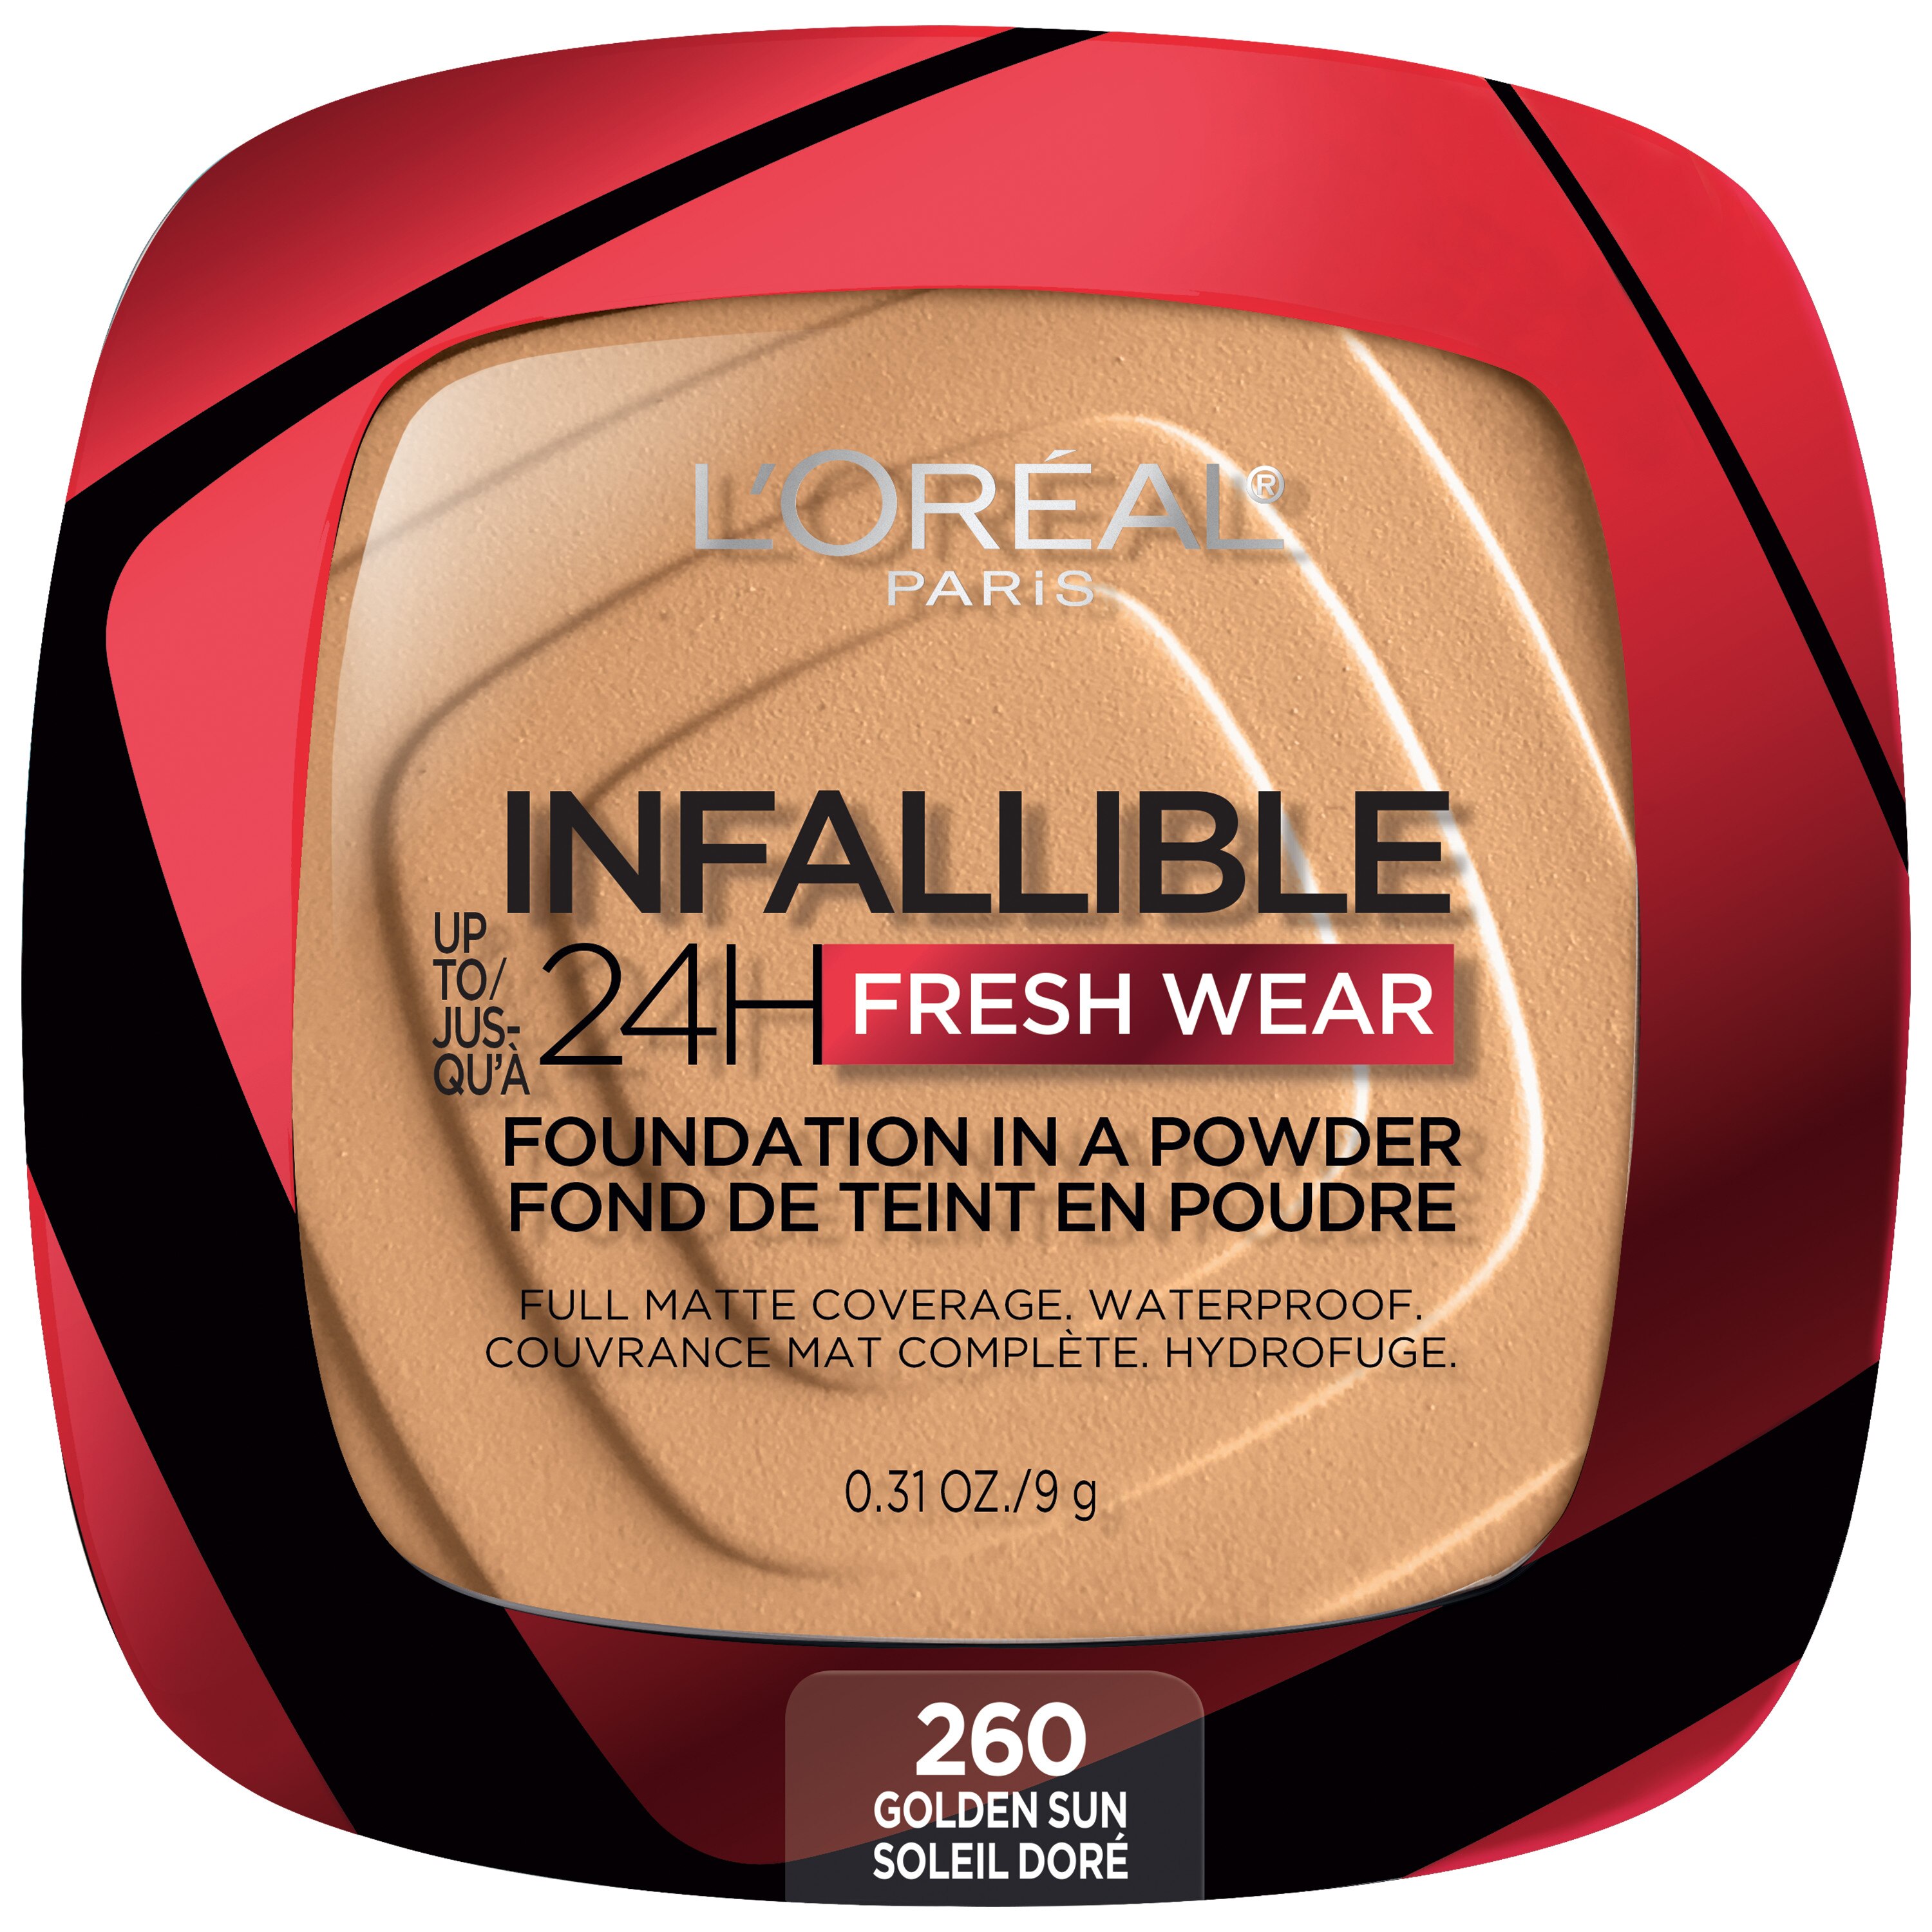 L'Oreal Paris Infallible Up To 24H Fresh Wear Foundation In A Powder, Golden Sun, 0.31 Oz , CVS